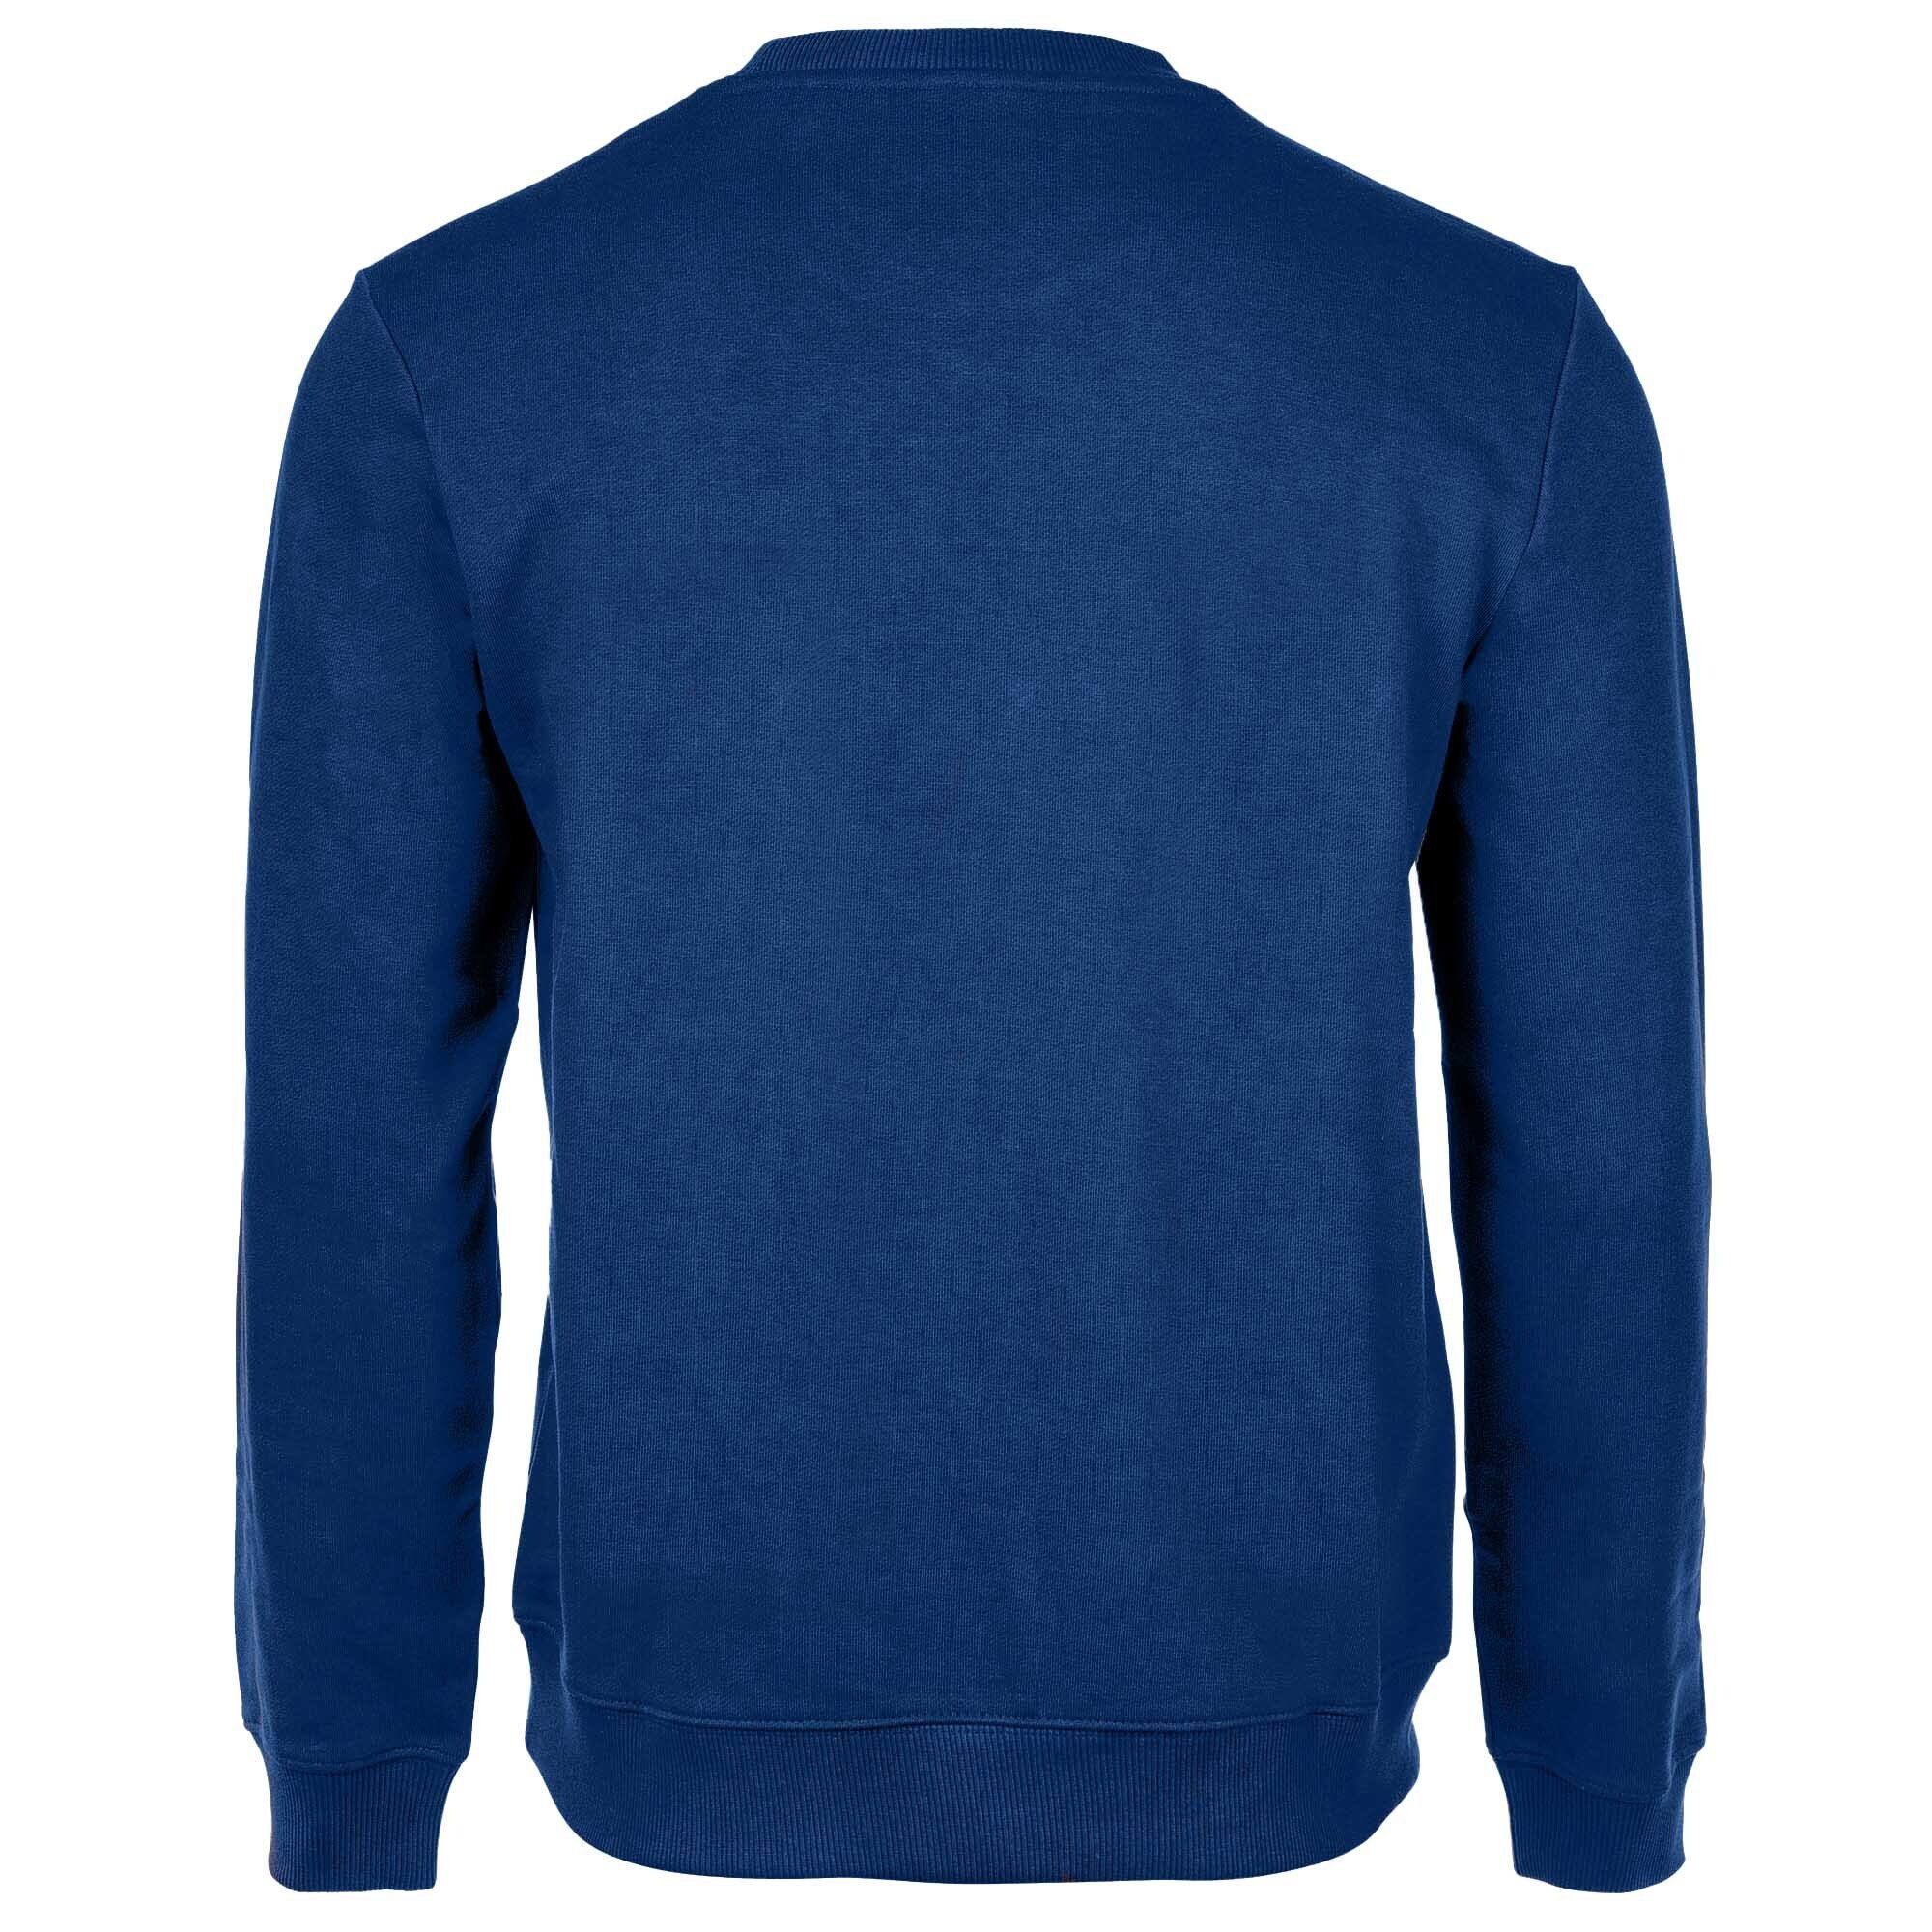 HUGO Sweatshirt Herren Sweater, - Mittelblau Diragol212 Sweatshirt, Rundhals